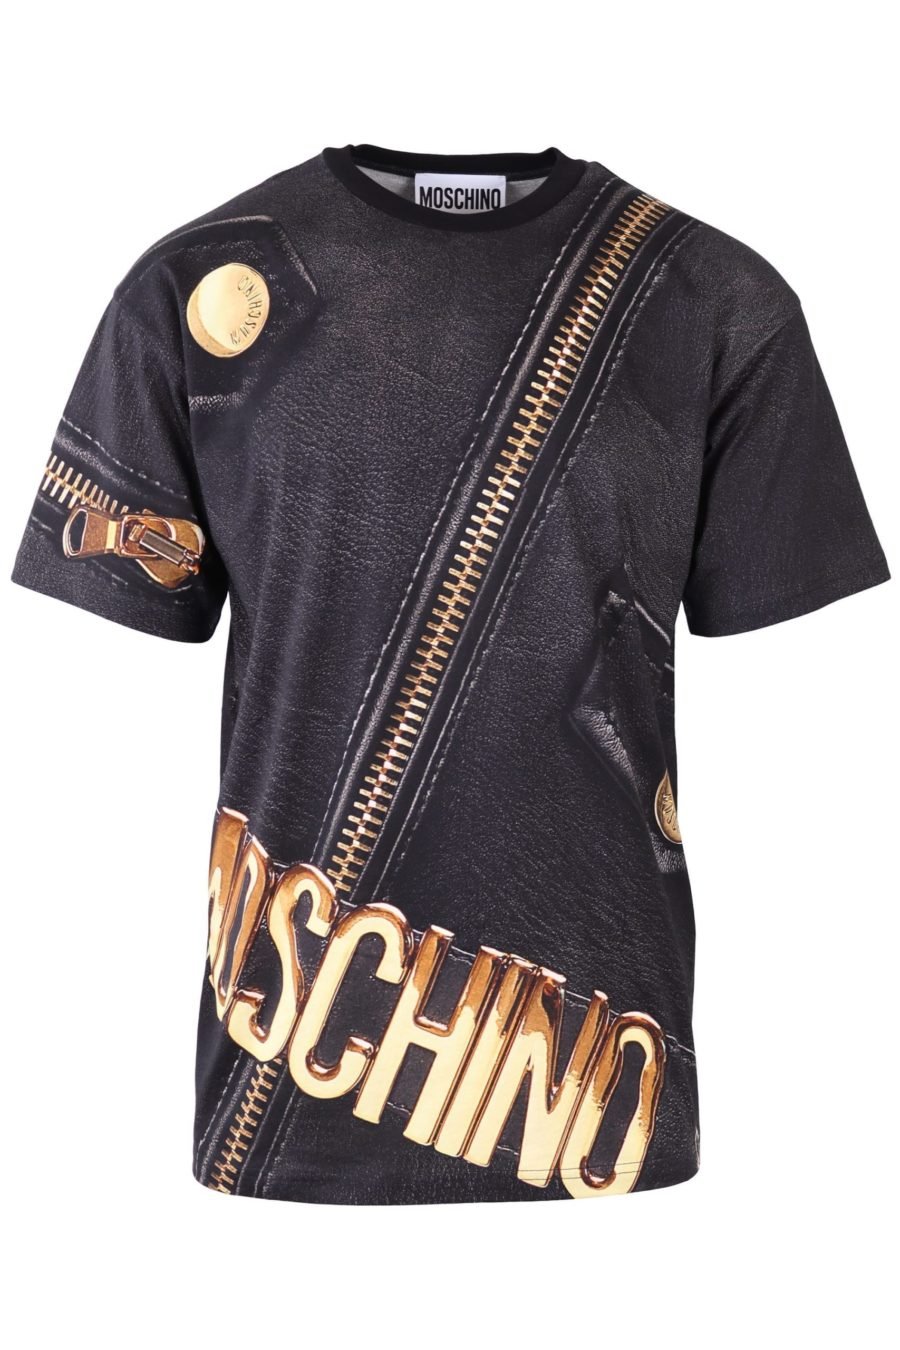 Camiseta Moschino Couture negra con cremallera doradas - IMG 6513 scaled